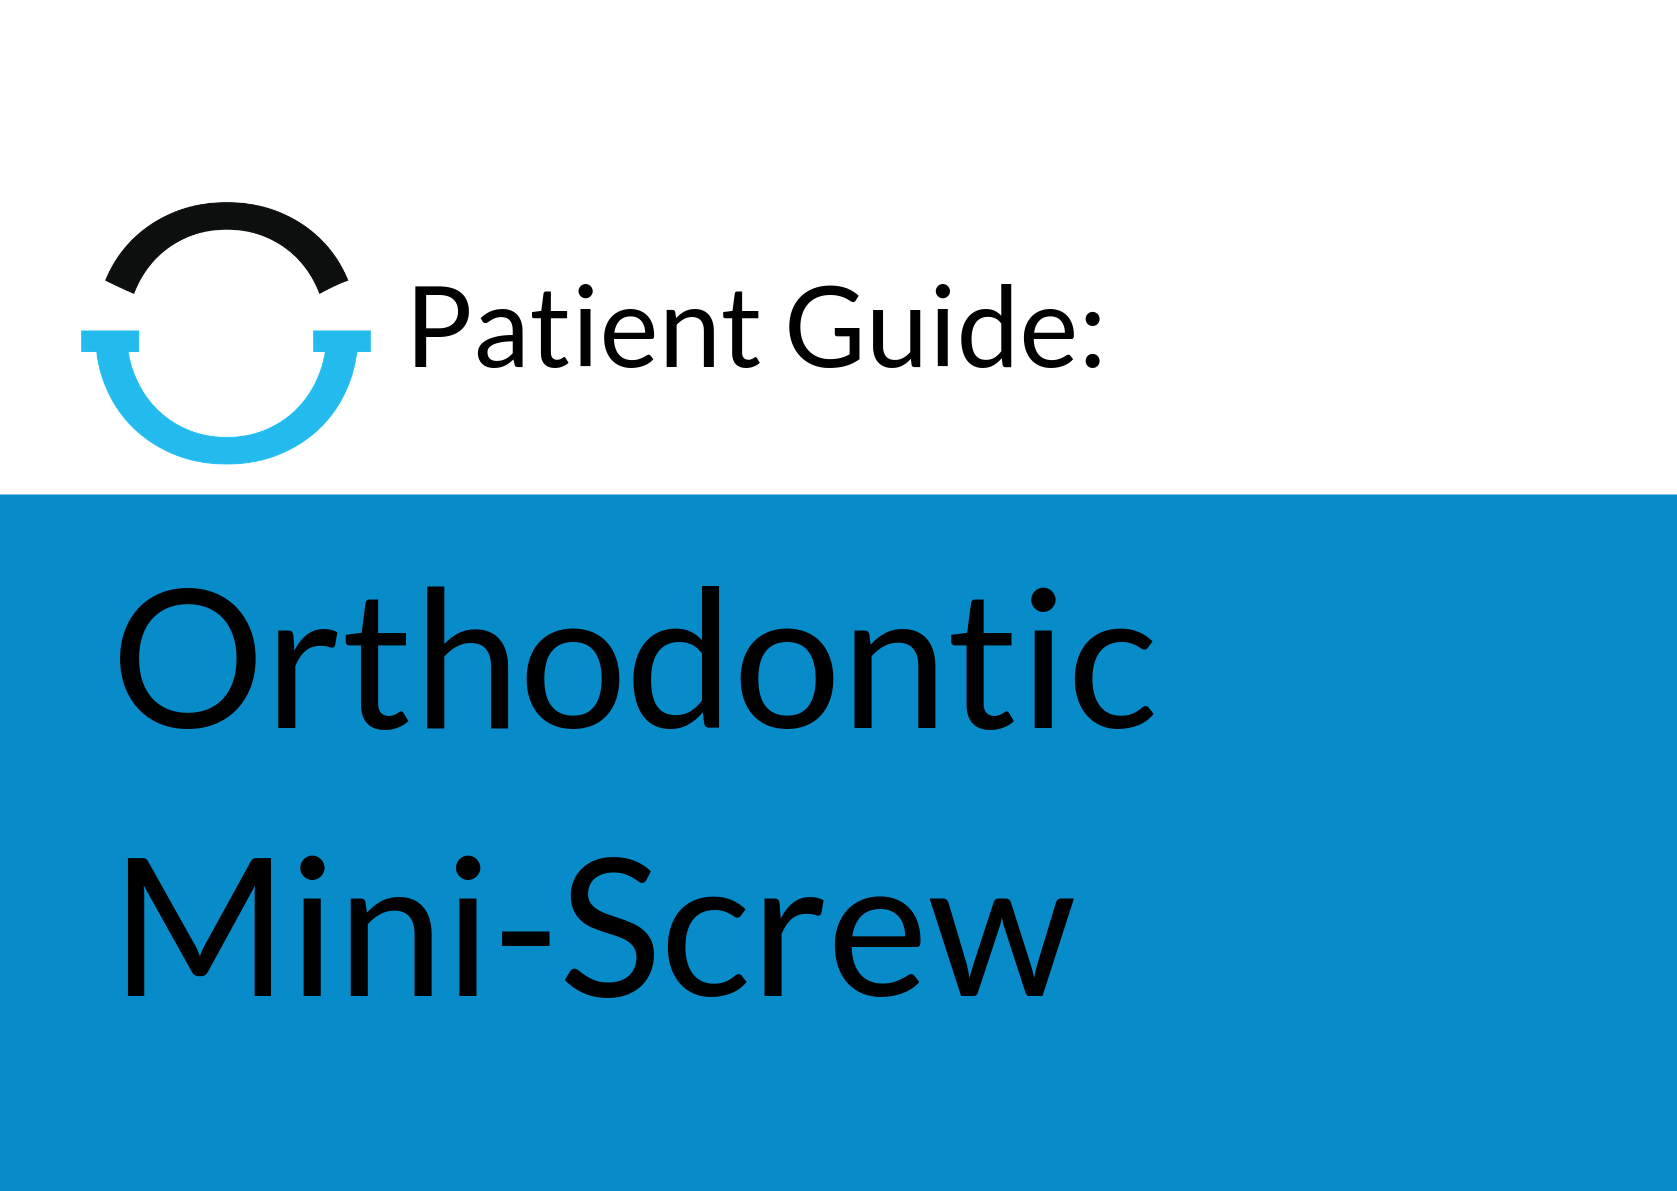 Patient Guide Header Image – Orthodontic Mini Screw LARGE